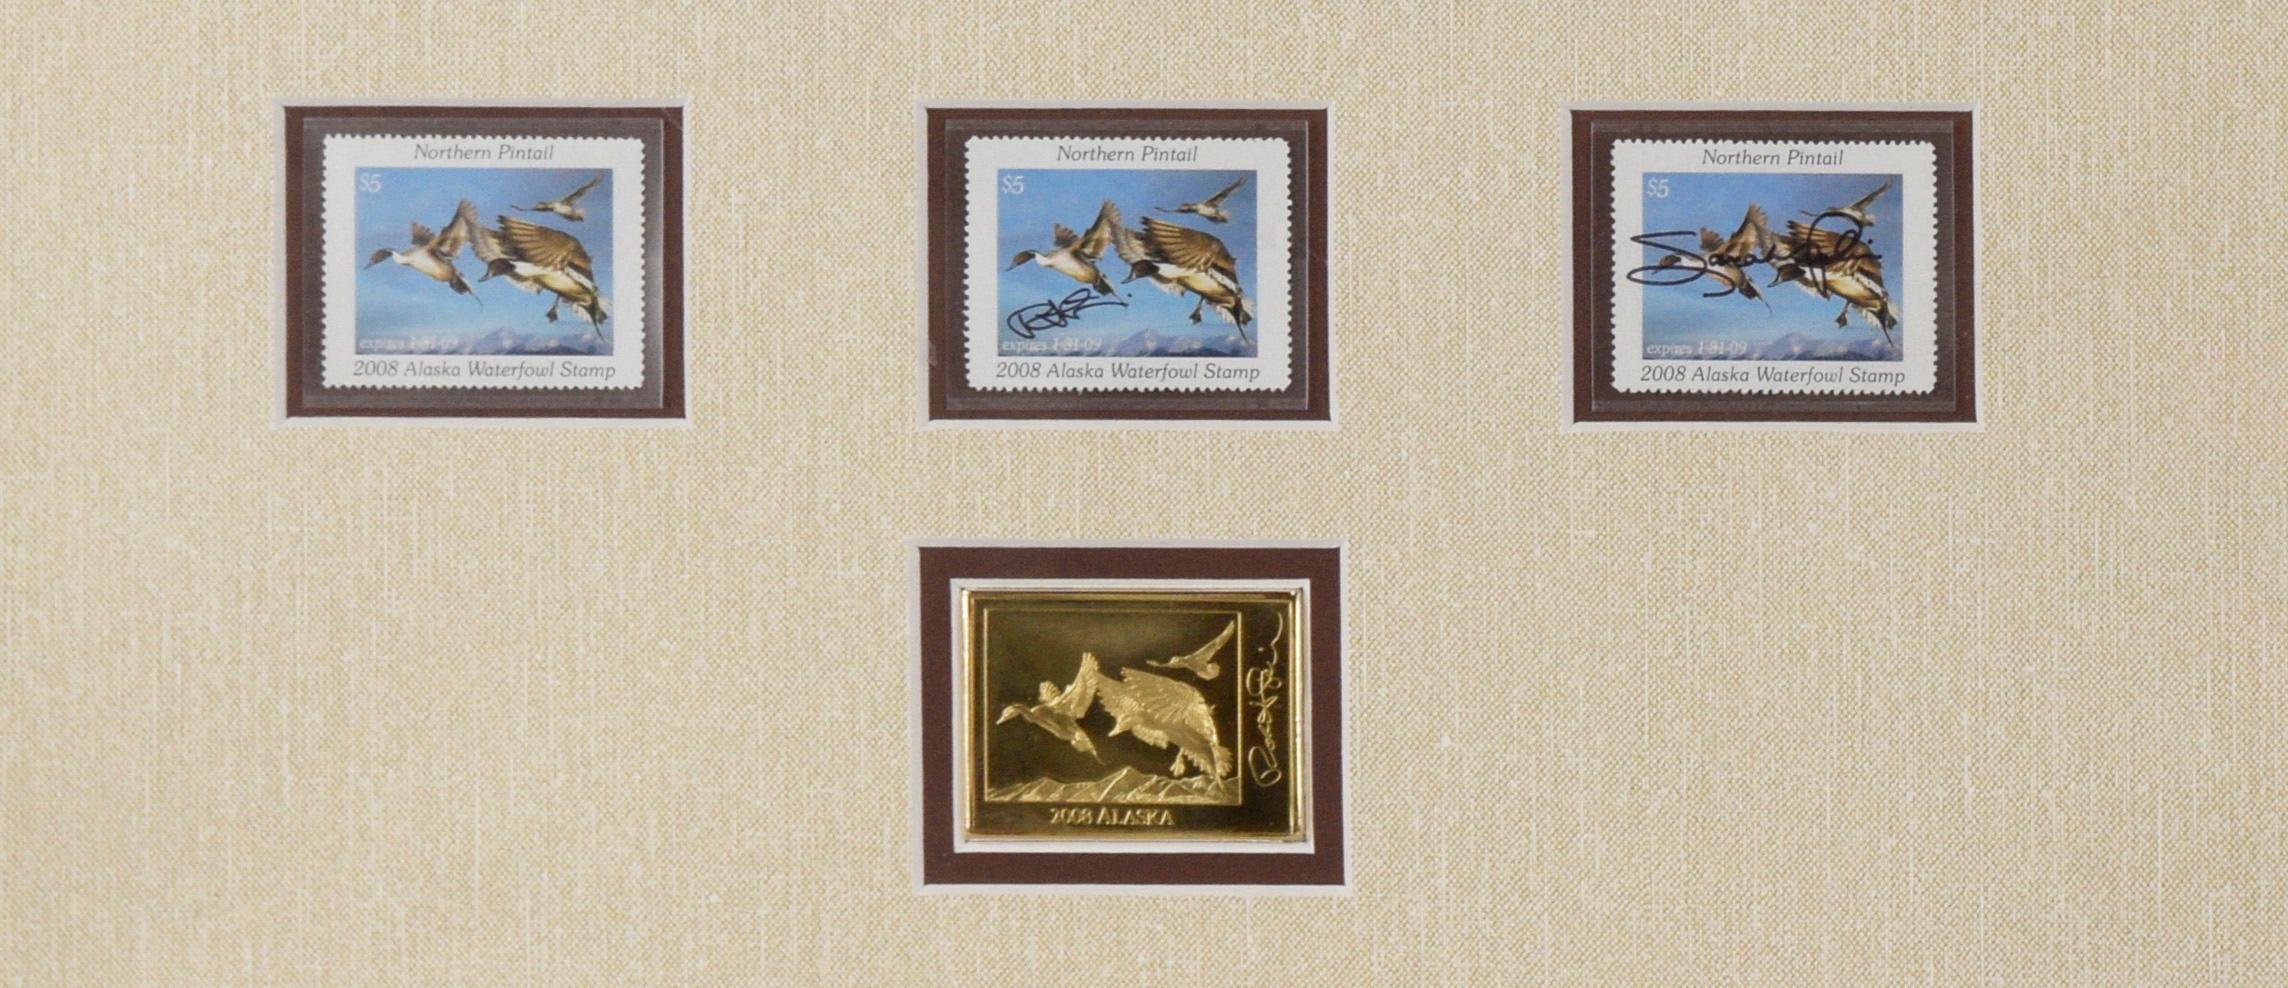 2008 Alaska Duck Stamp Print by Robert Steiner In Good Condition For Sale In Soquel, CA